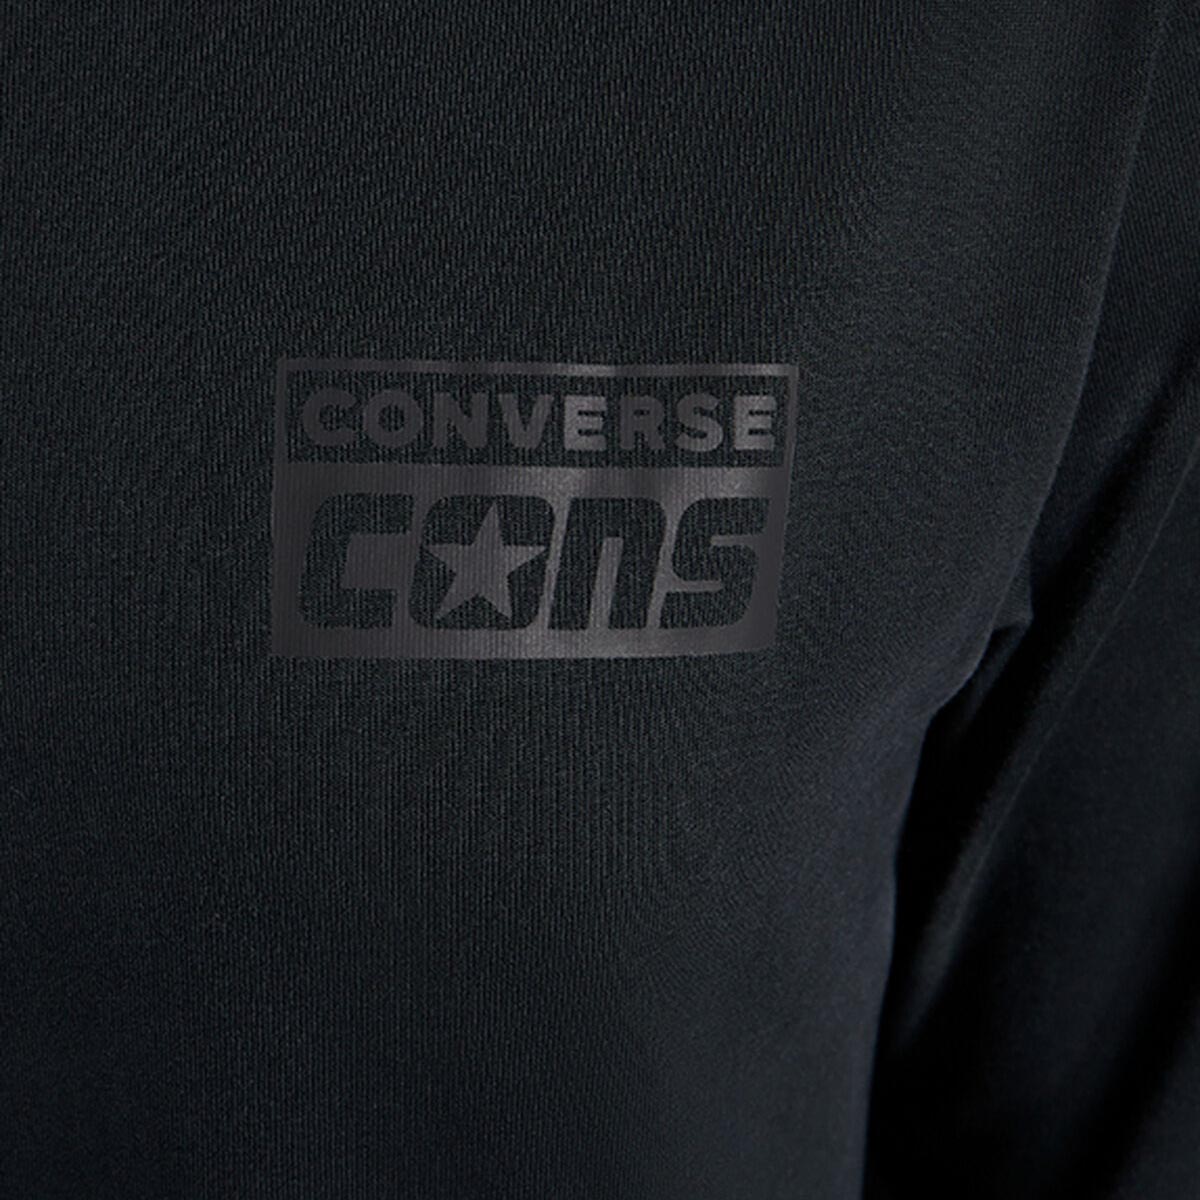 Converse Long Sleeve T-Shirt - Black image 5